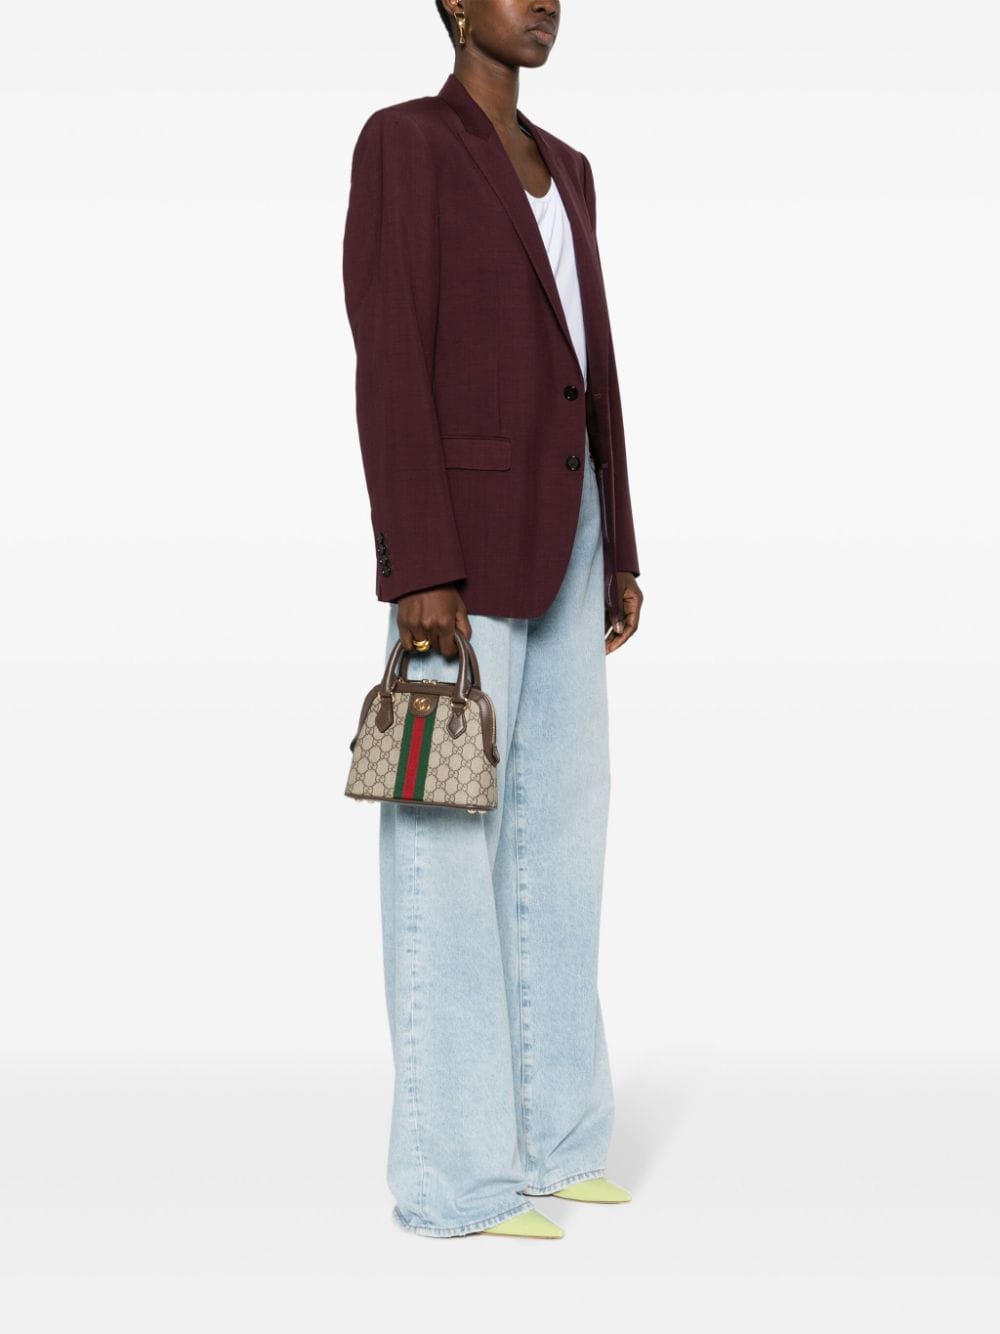 Gucci Mini Ophidia Tote Bag